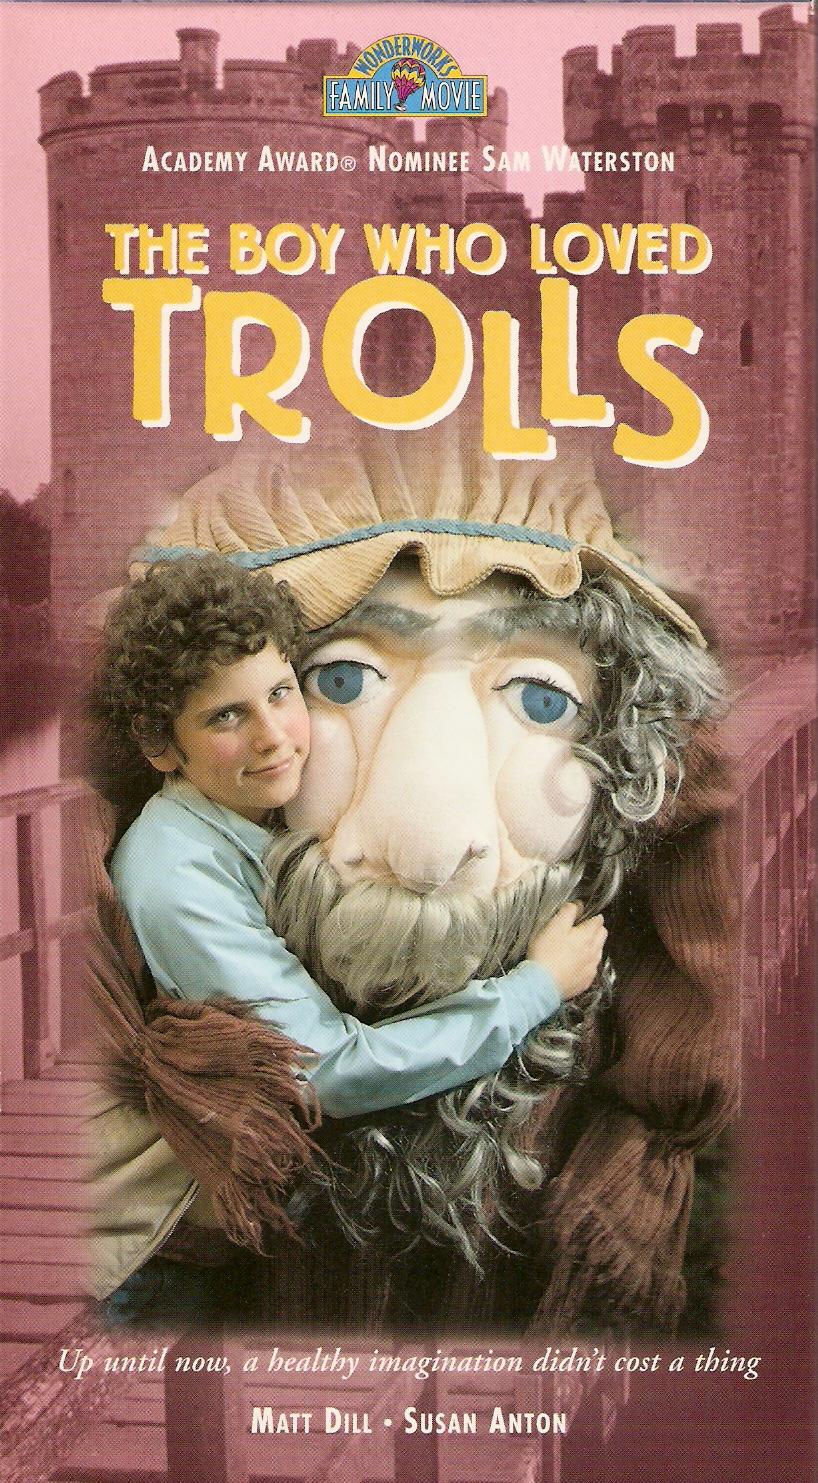 The Boy Who Loved Trolls (1984) Screenshot 4